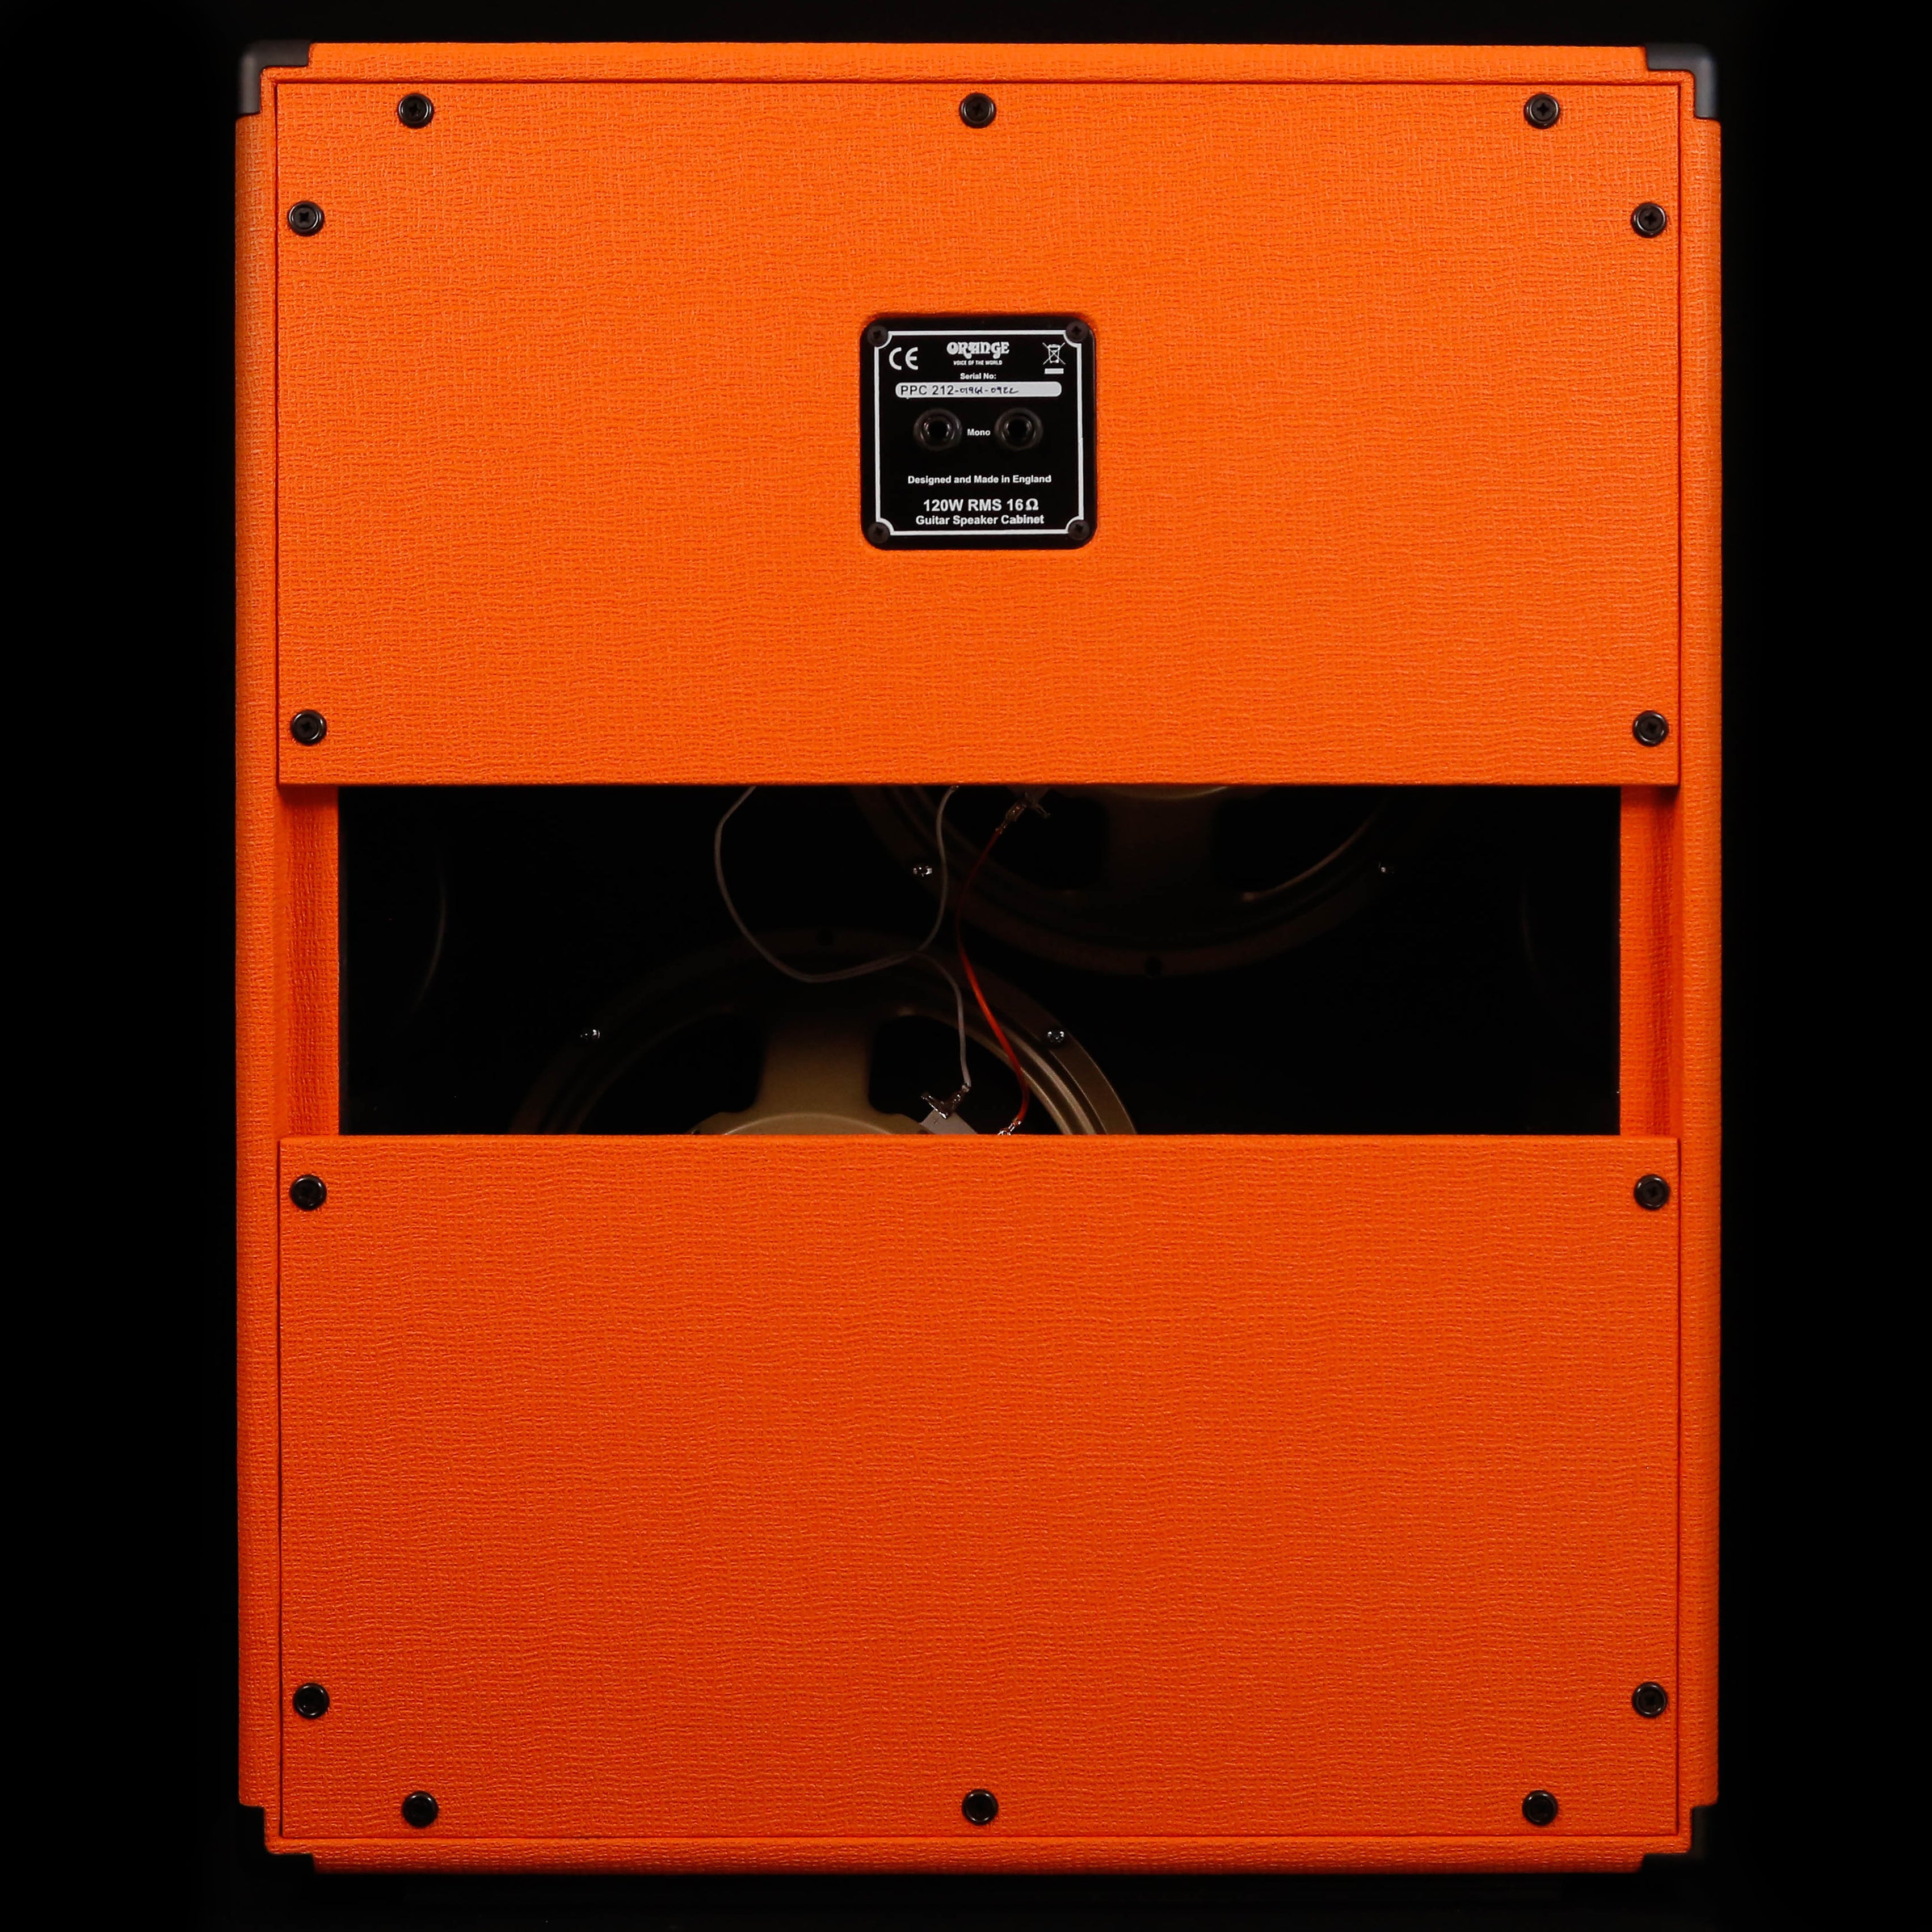 Orange PPC212 V Vertical 120-watt 2x12'' Cabinet - Orange